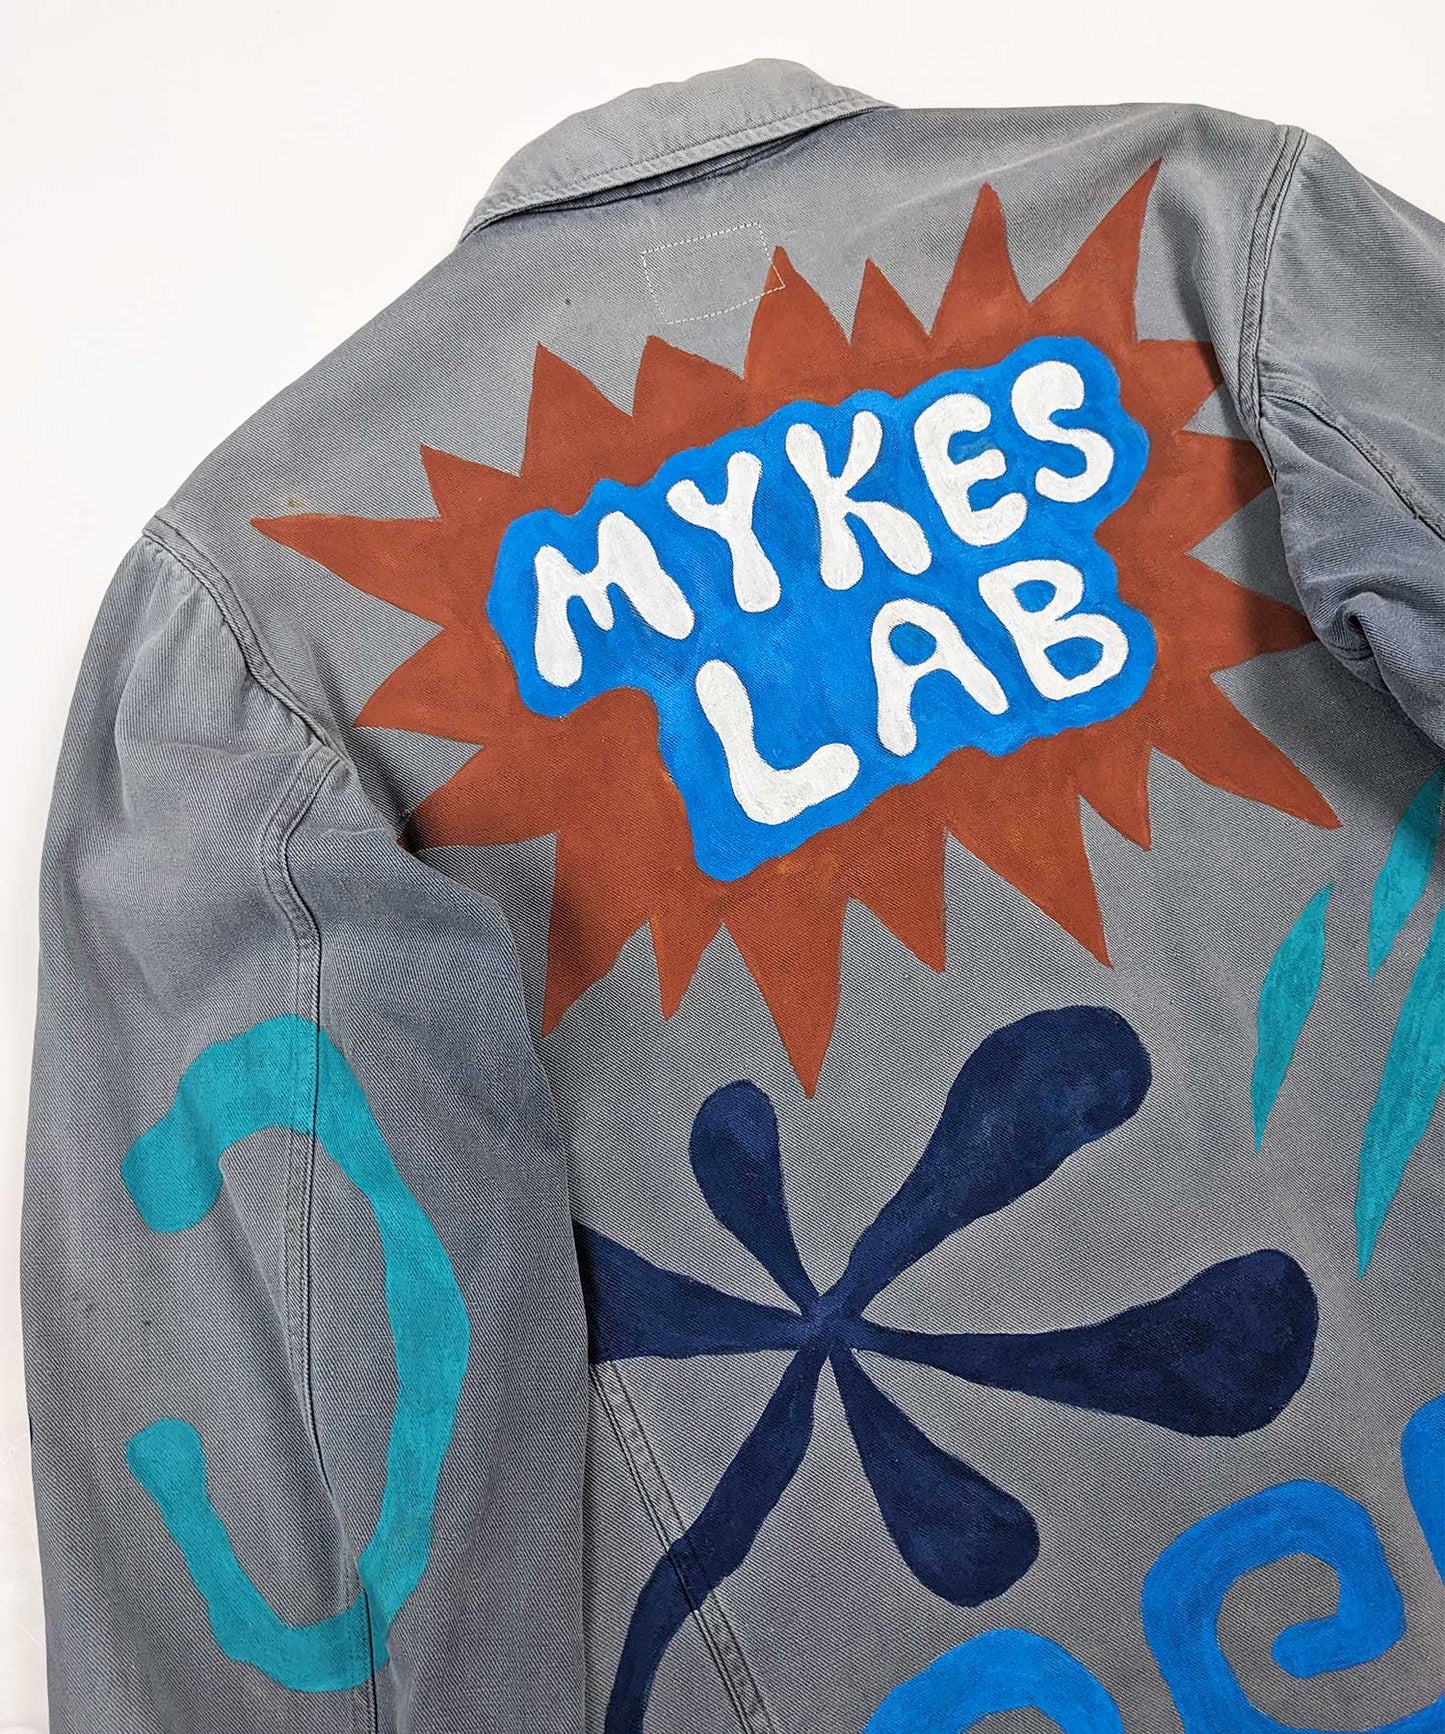 Oceanic Drift Painted Work Jacket - Mykes Lab